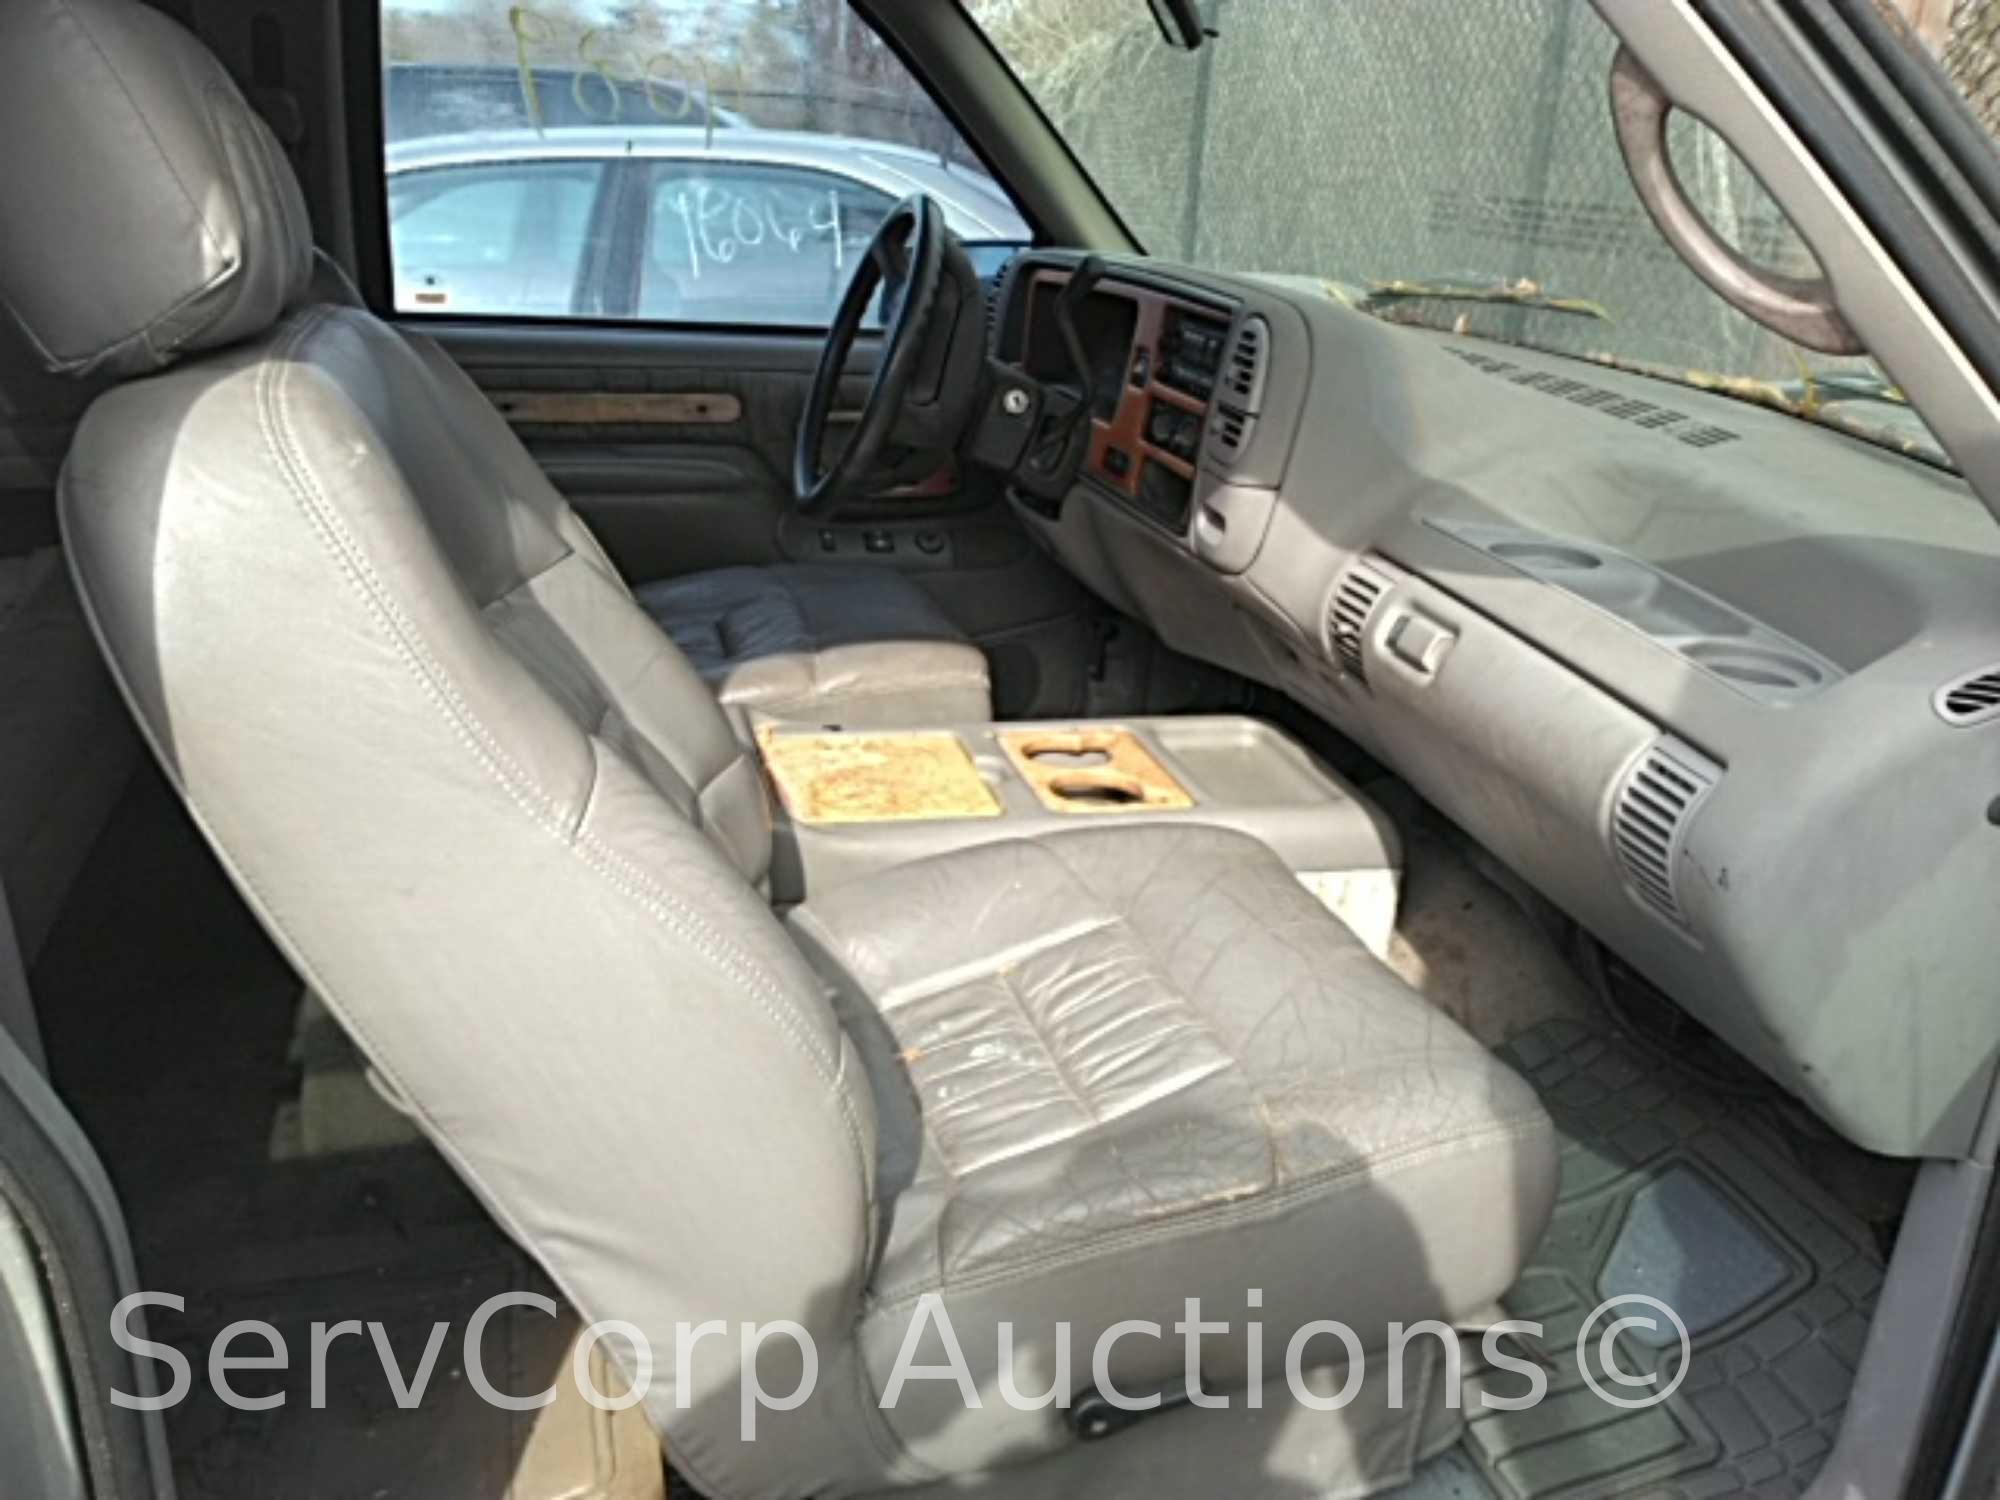 1996 Chevrolet Silverado Pickup Truck, VIN # 2GBEC19R3T1201330